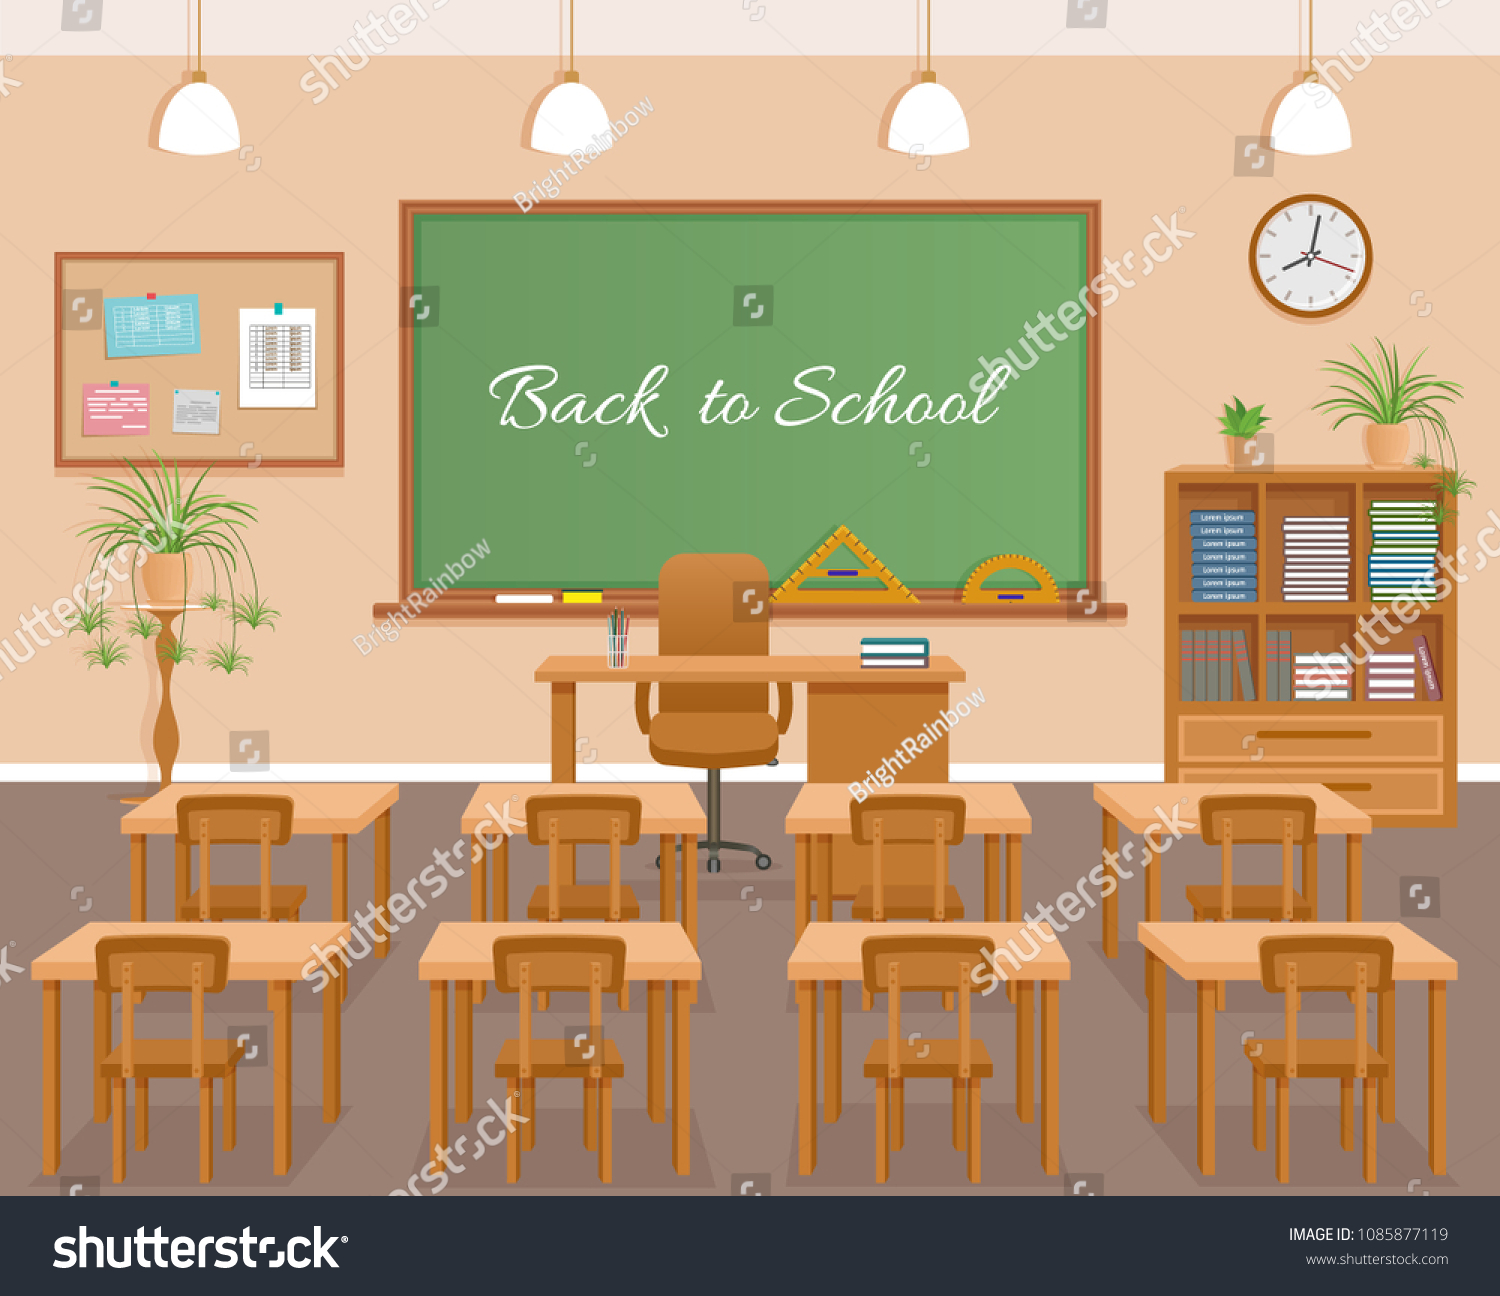 School classroom with chalkboard, student desks and teacher's desk. School class room interior design with text on chalkboard. #1085877119